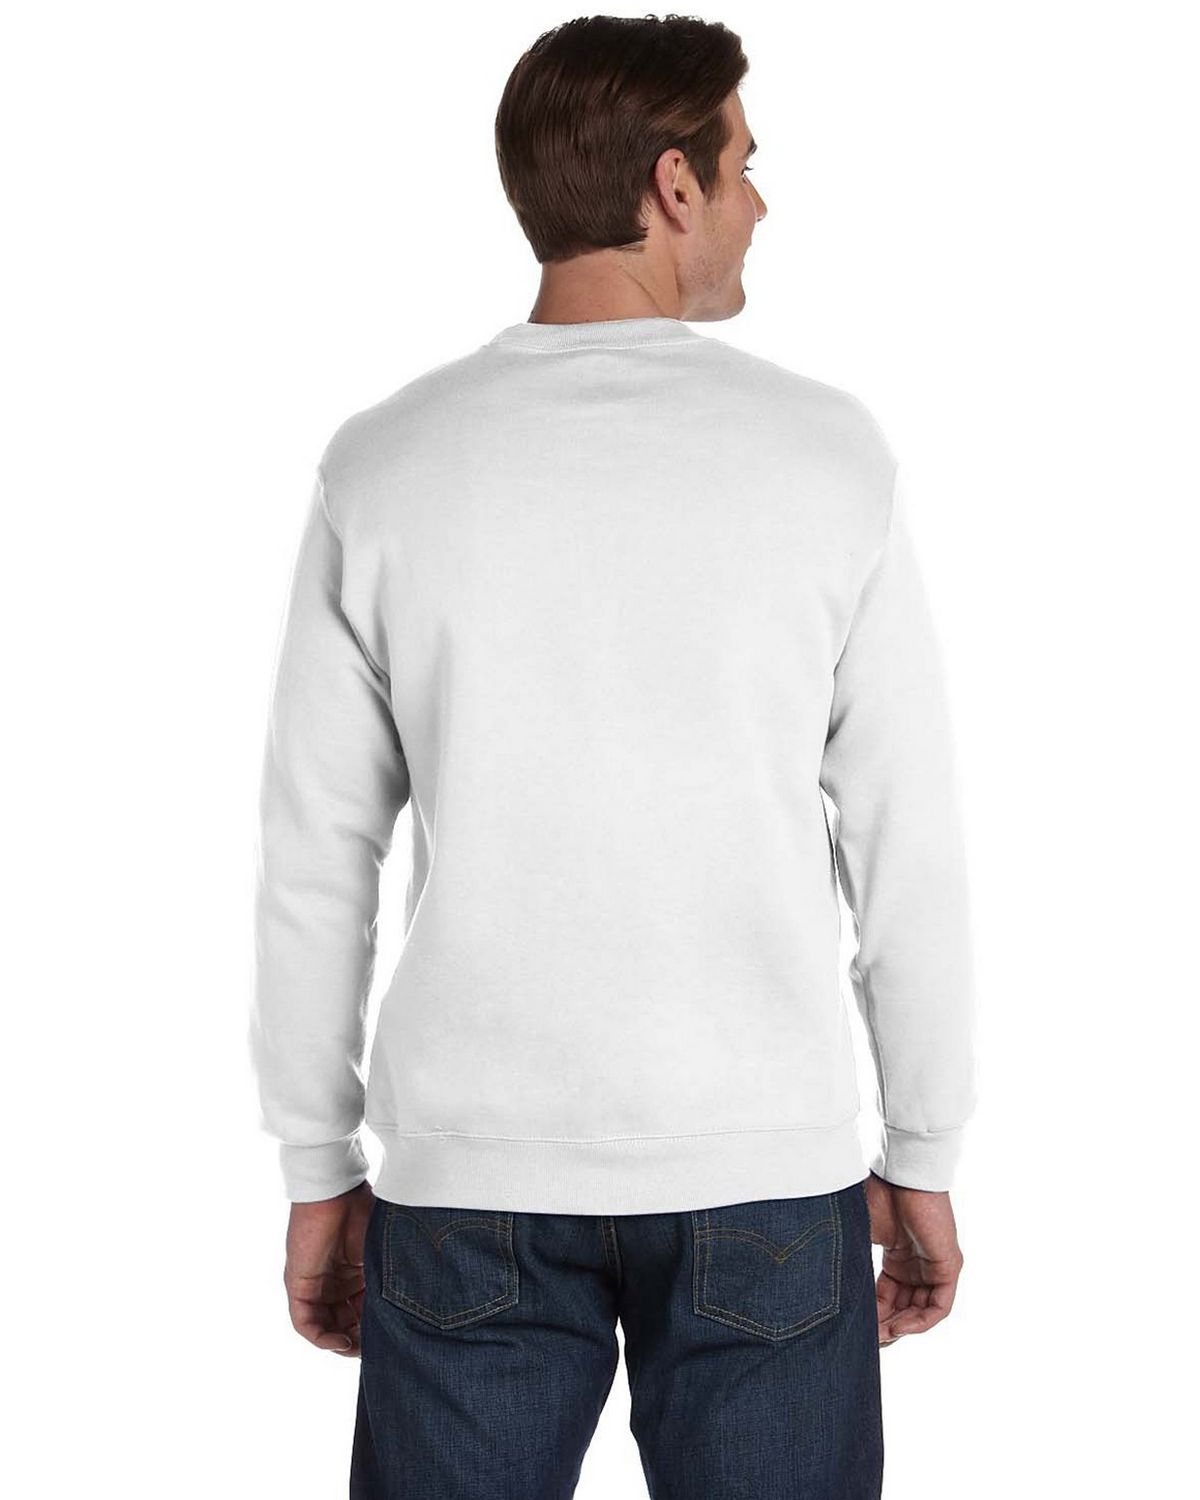 Buy Gildan 12000 Adult DryBlend Crewneck Sweatshirt